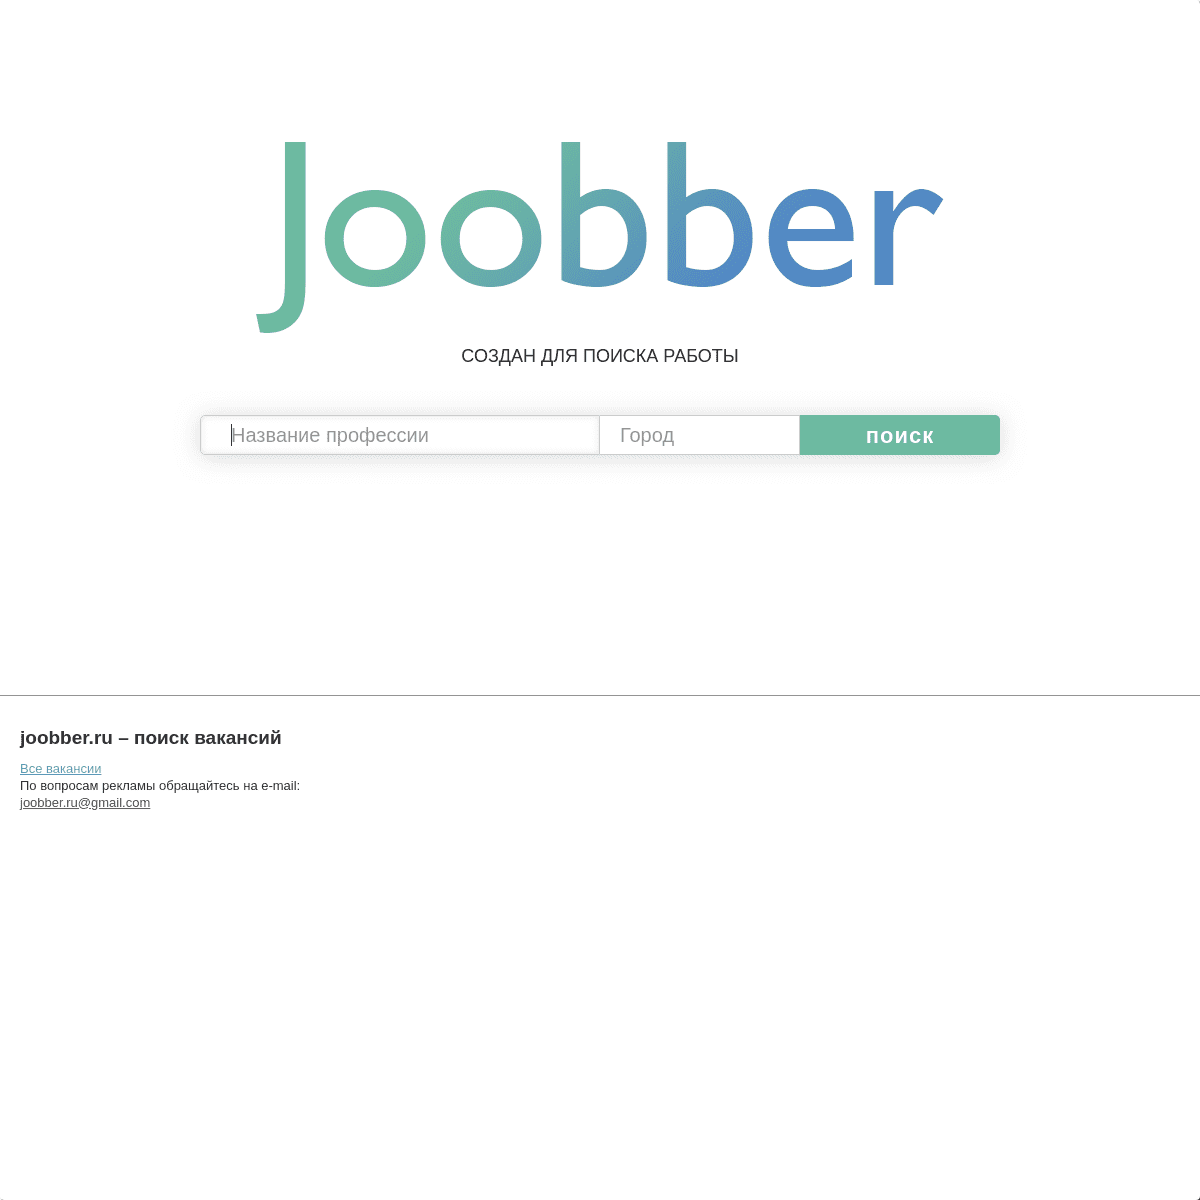 A complete backup of joobber.ru